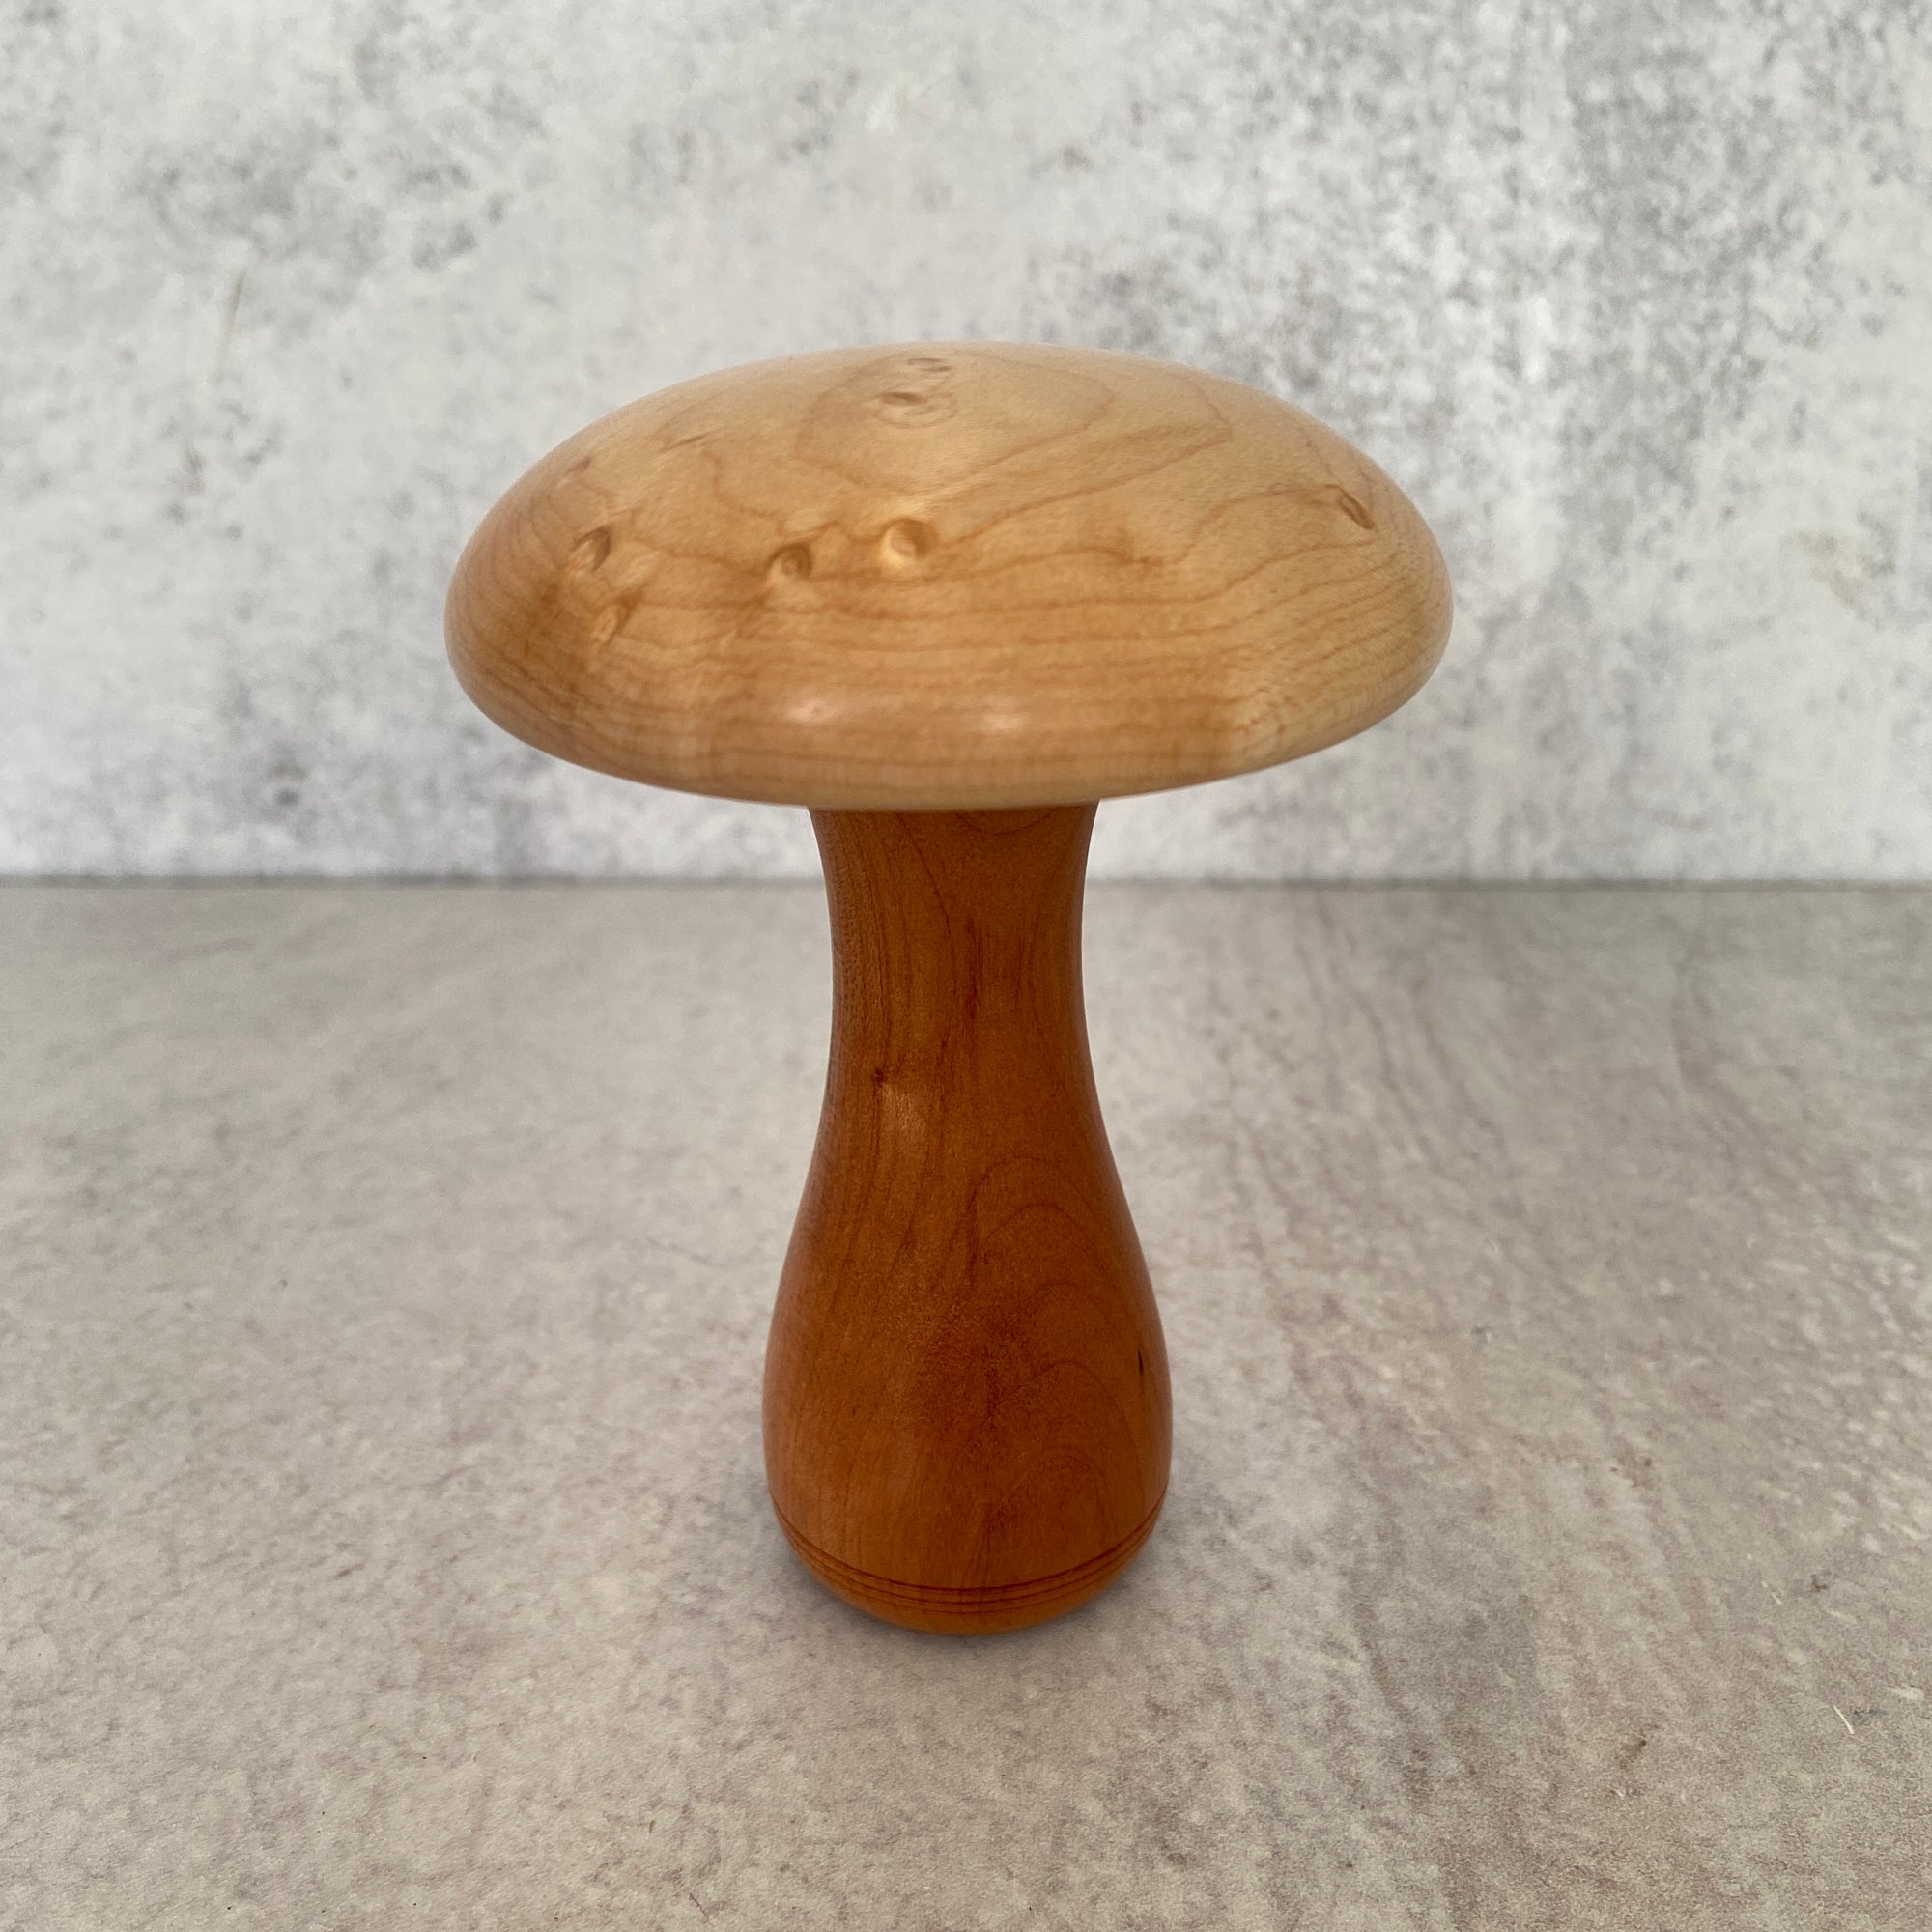 Wooden Darning Mushroom Set - Stitched Modern